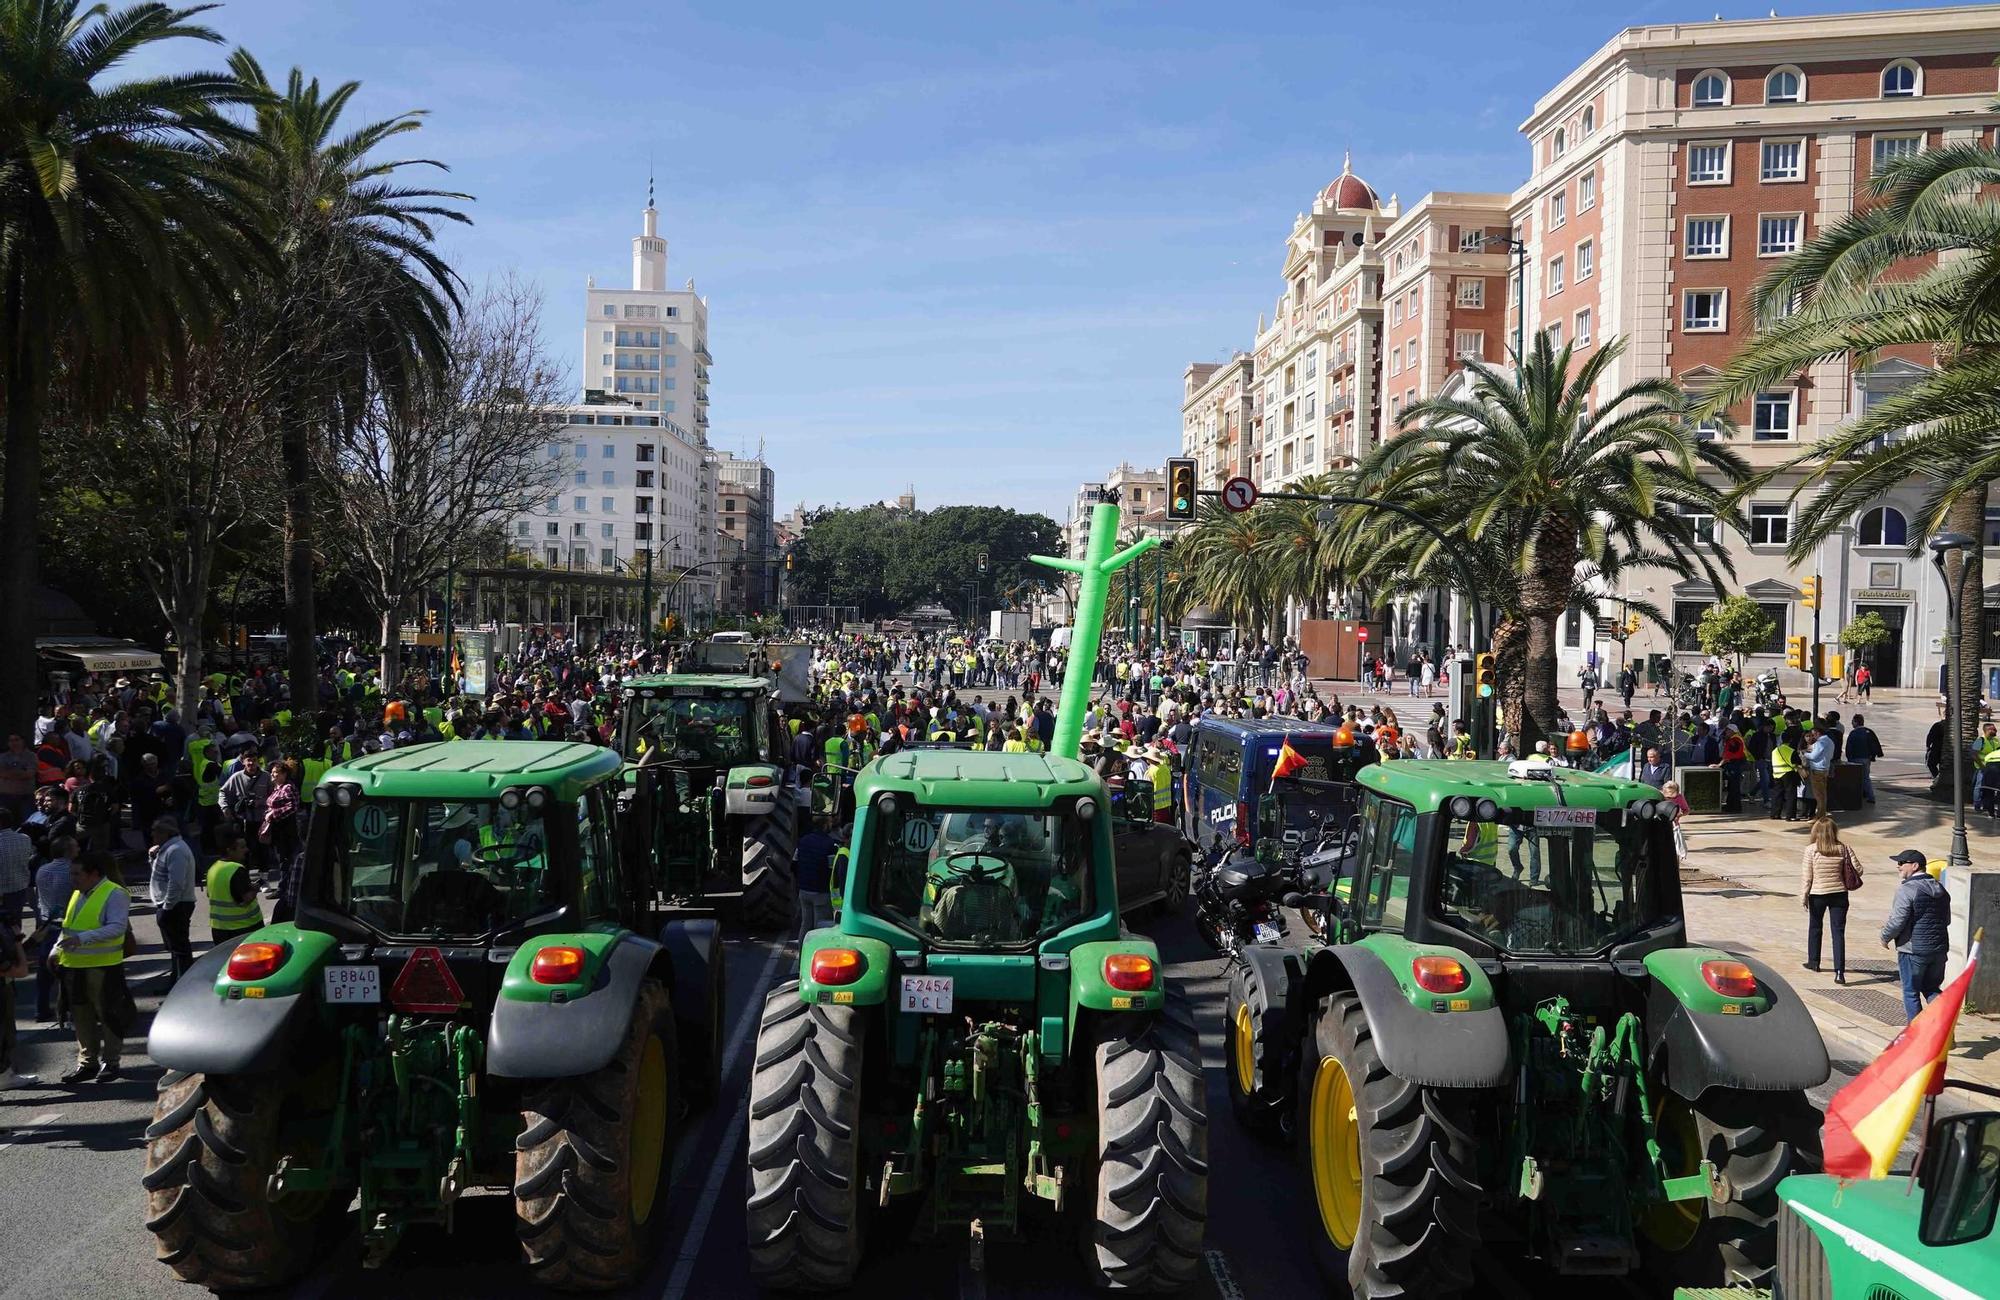 Málaga volvió a llenarse de tractores este miércoles